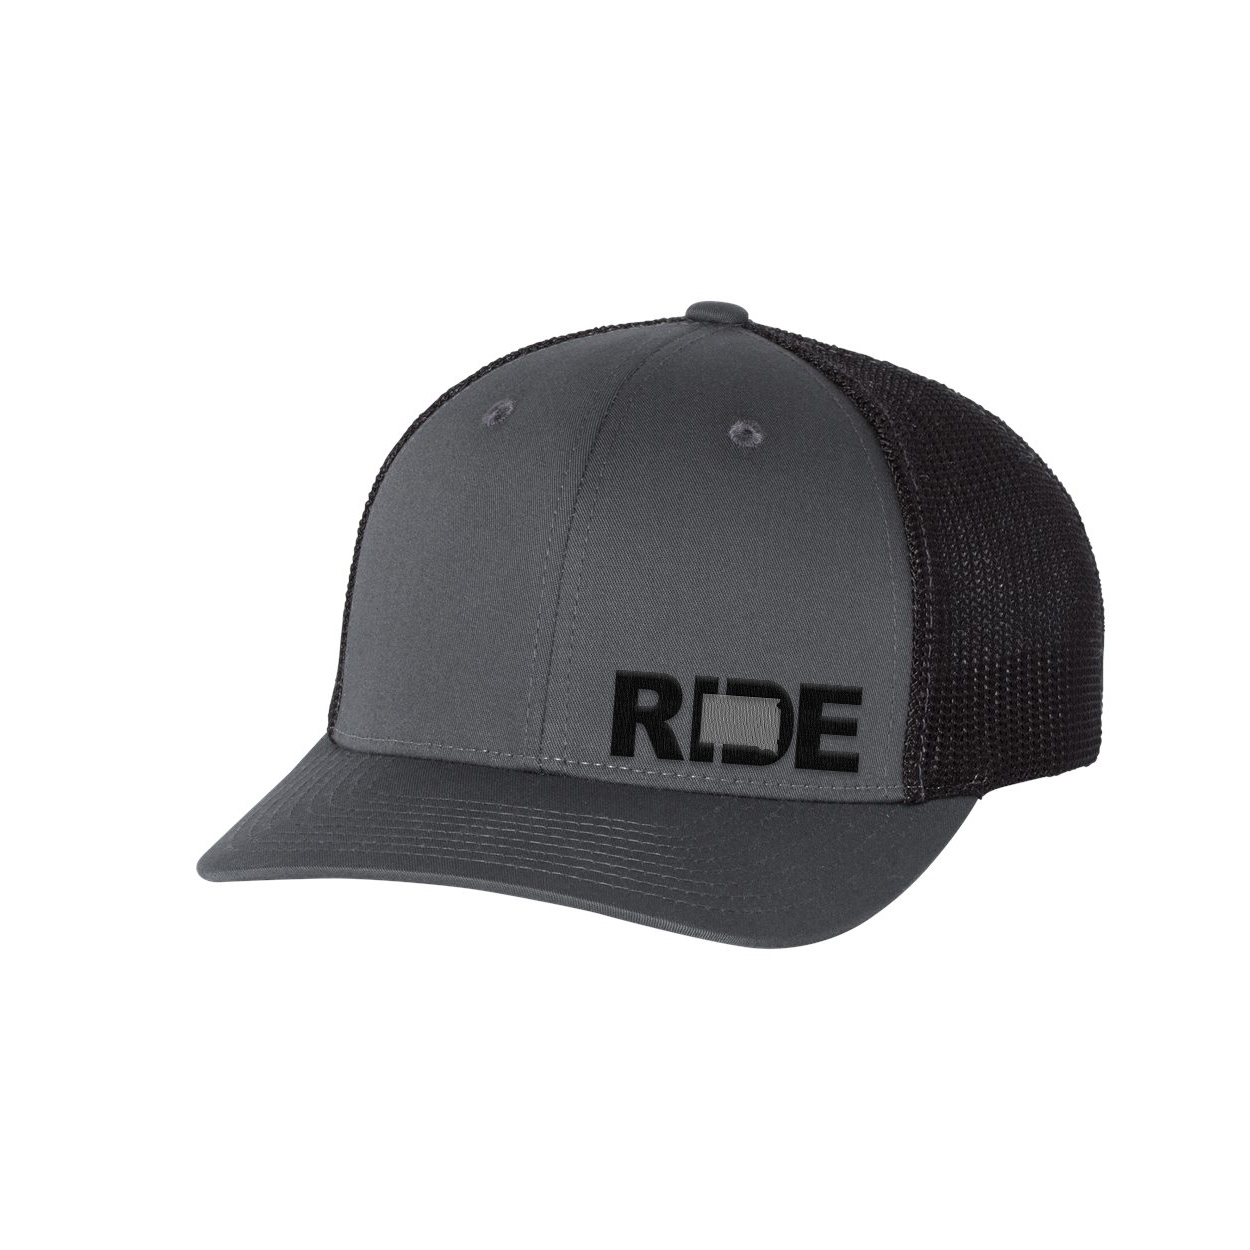 Ride South Dakota Night Out Embroidered Snapback Trucker Hat Gray/Black